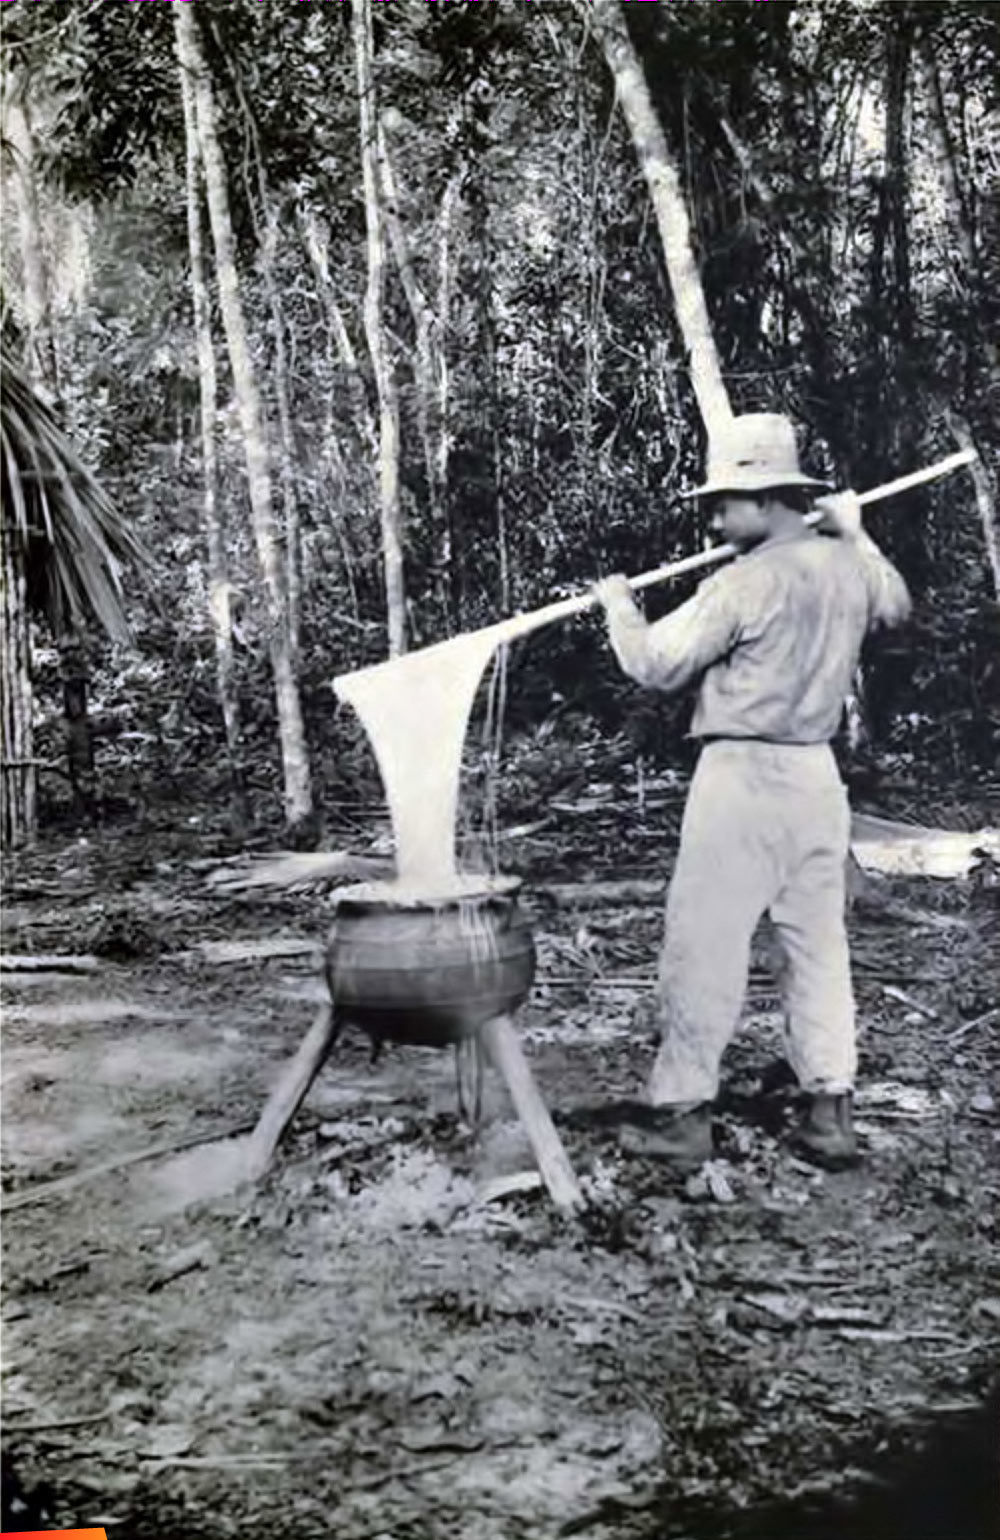 Cooking the sapodilla resin to make chicle latex, around 1936